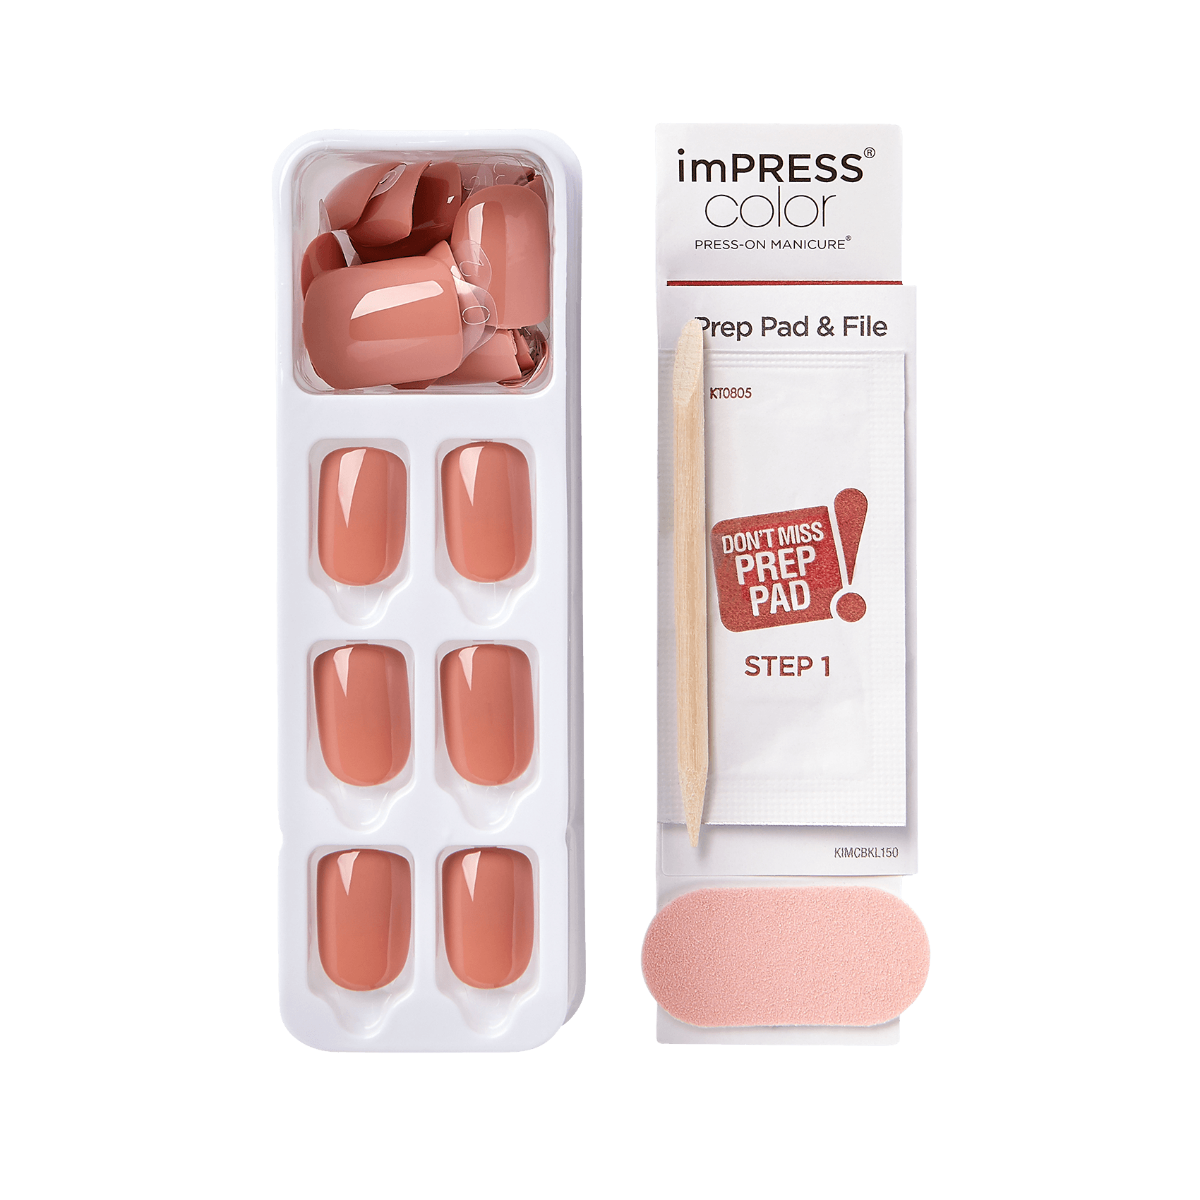 KISS ImPRESS Color Press-On Manicure - Caramel - Taille S